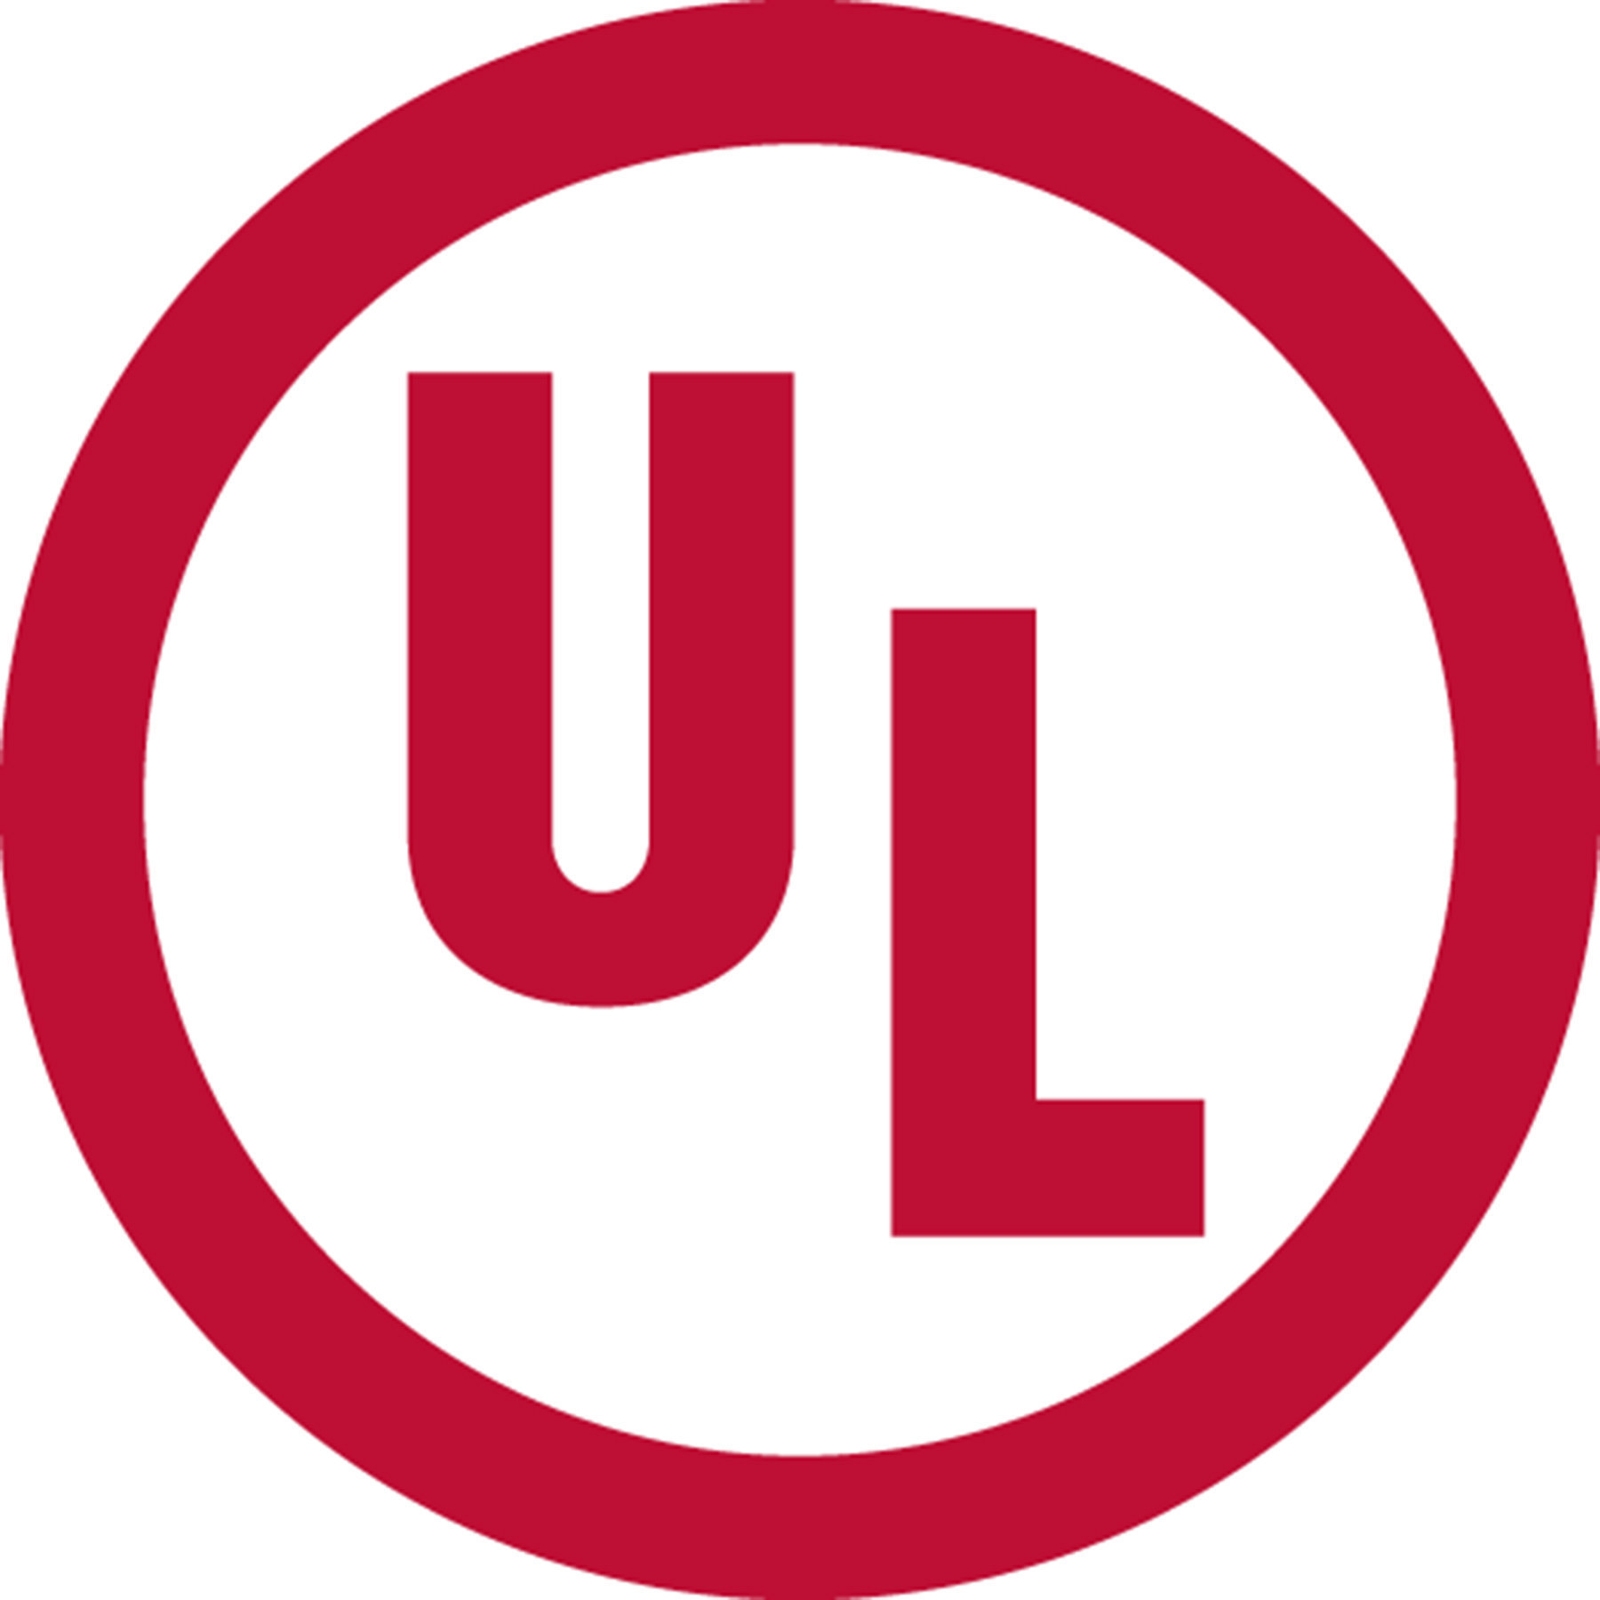 Underwriters Laboratories Logo